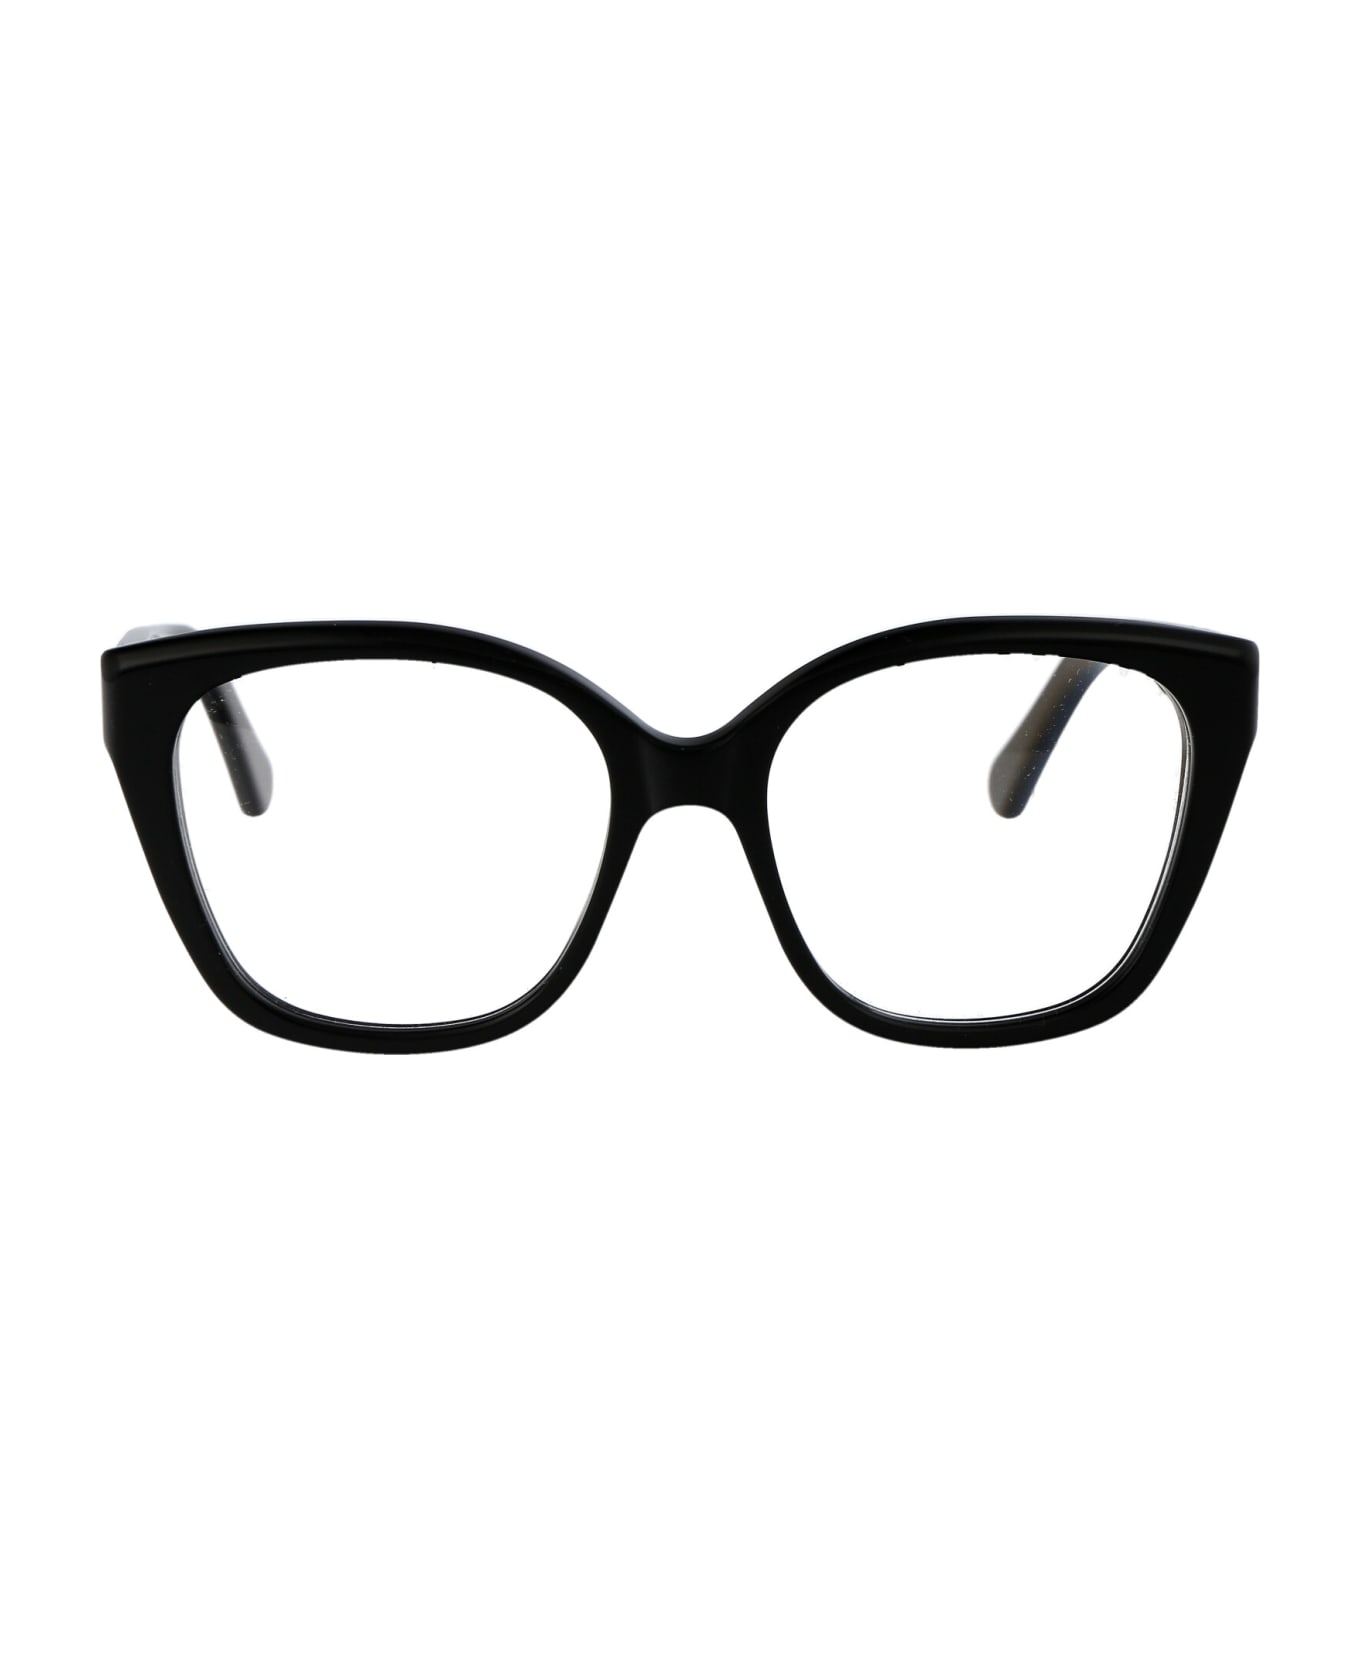 Chloé Eyewear Ch0241o Glasses - 001 BLACK BLACK TRANSPARENT